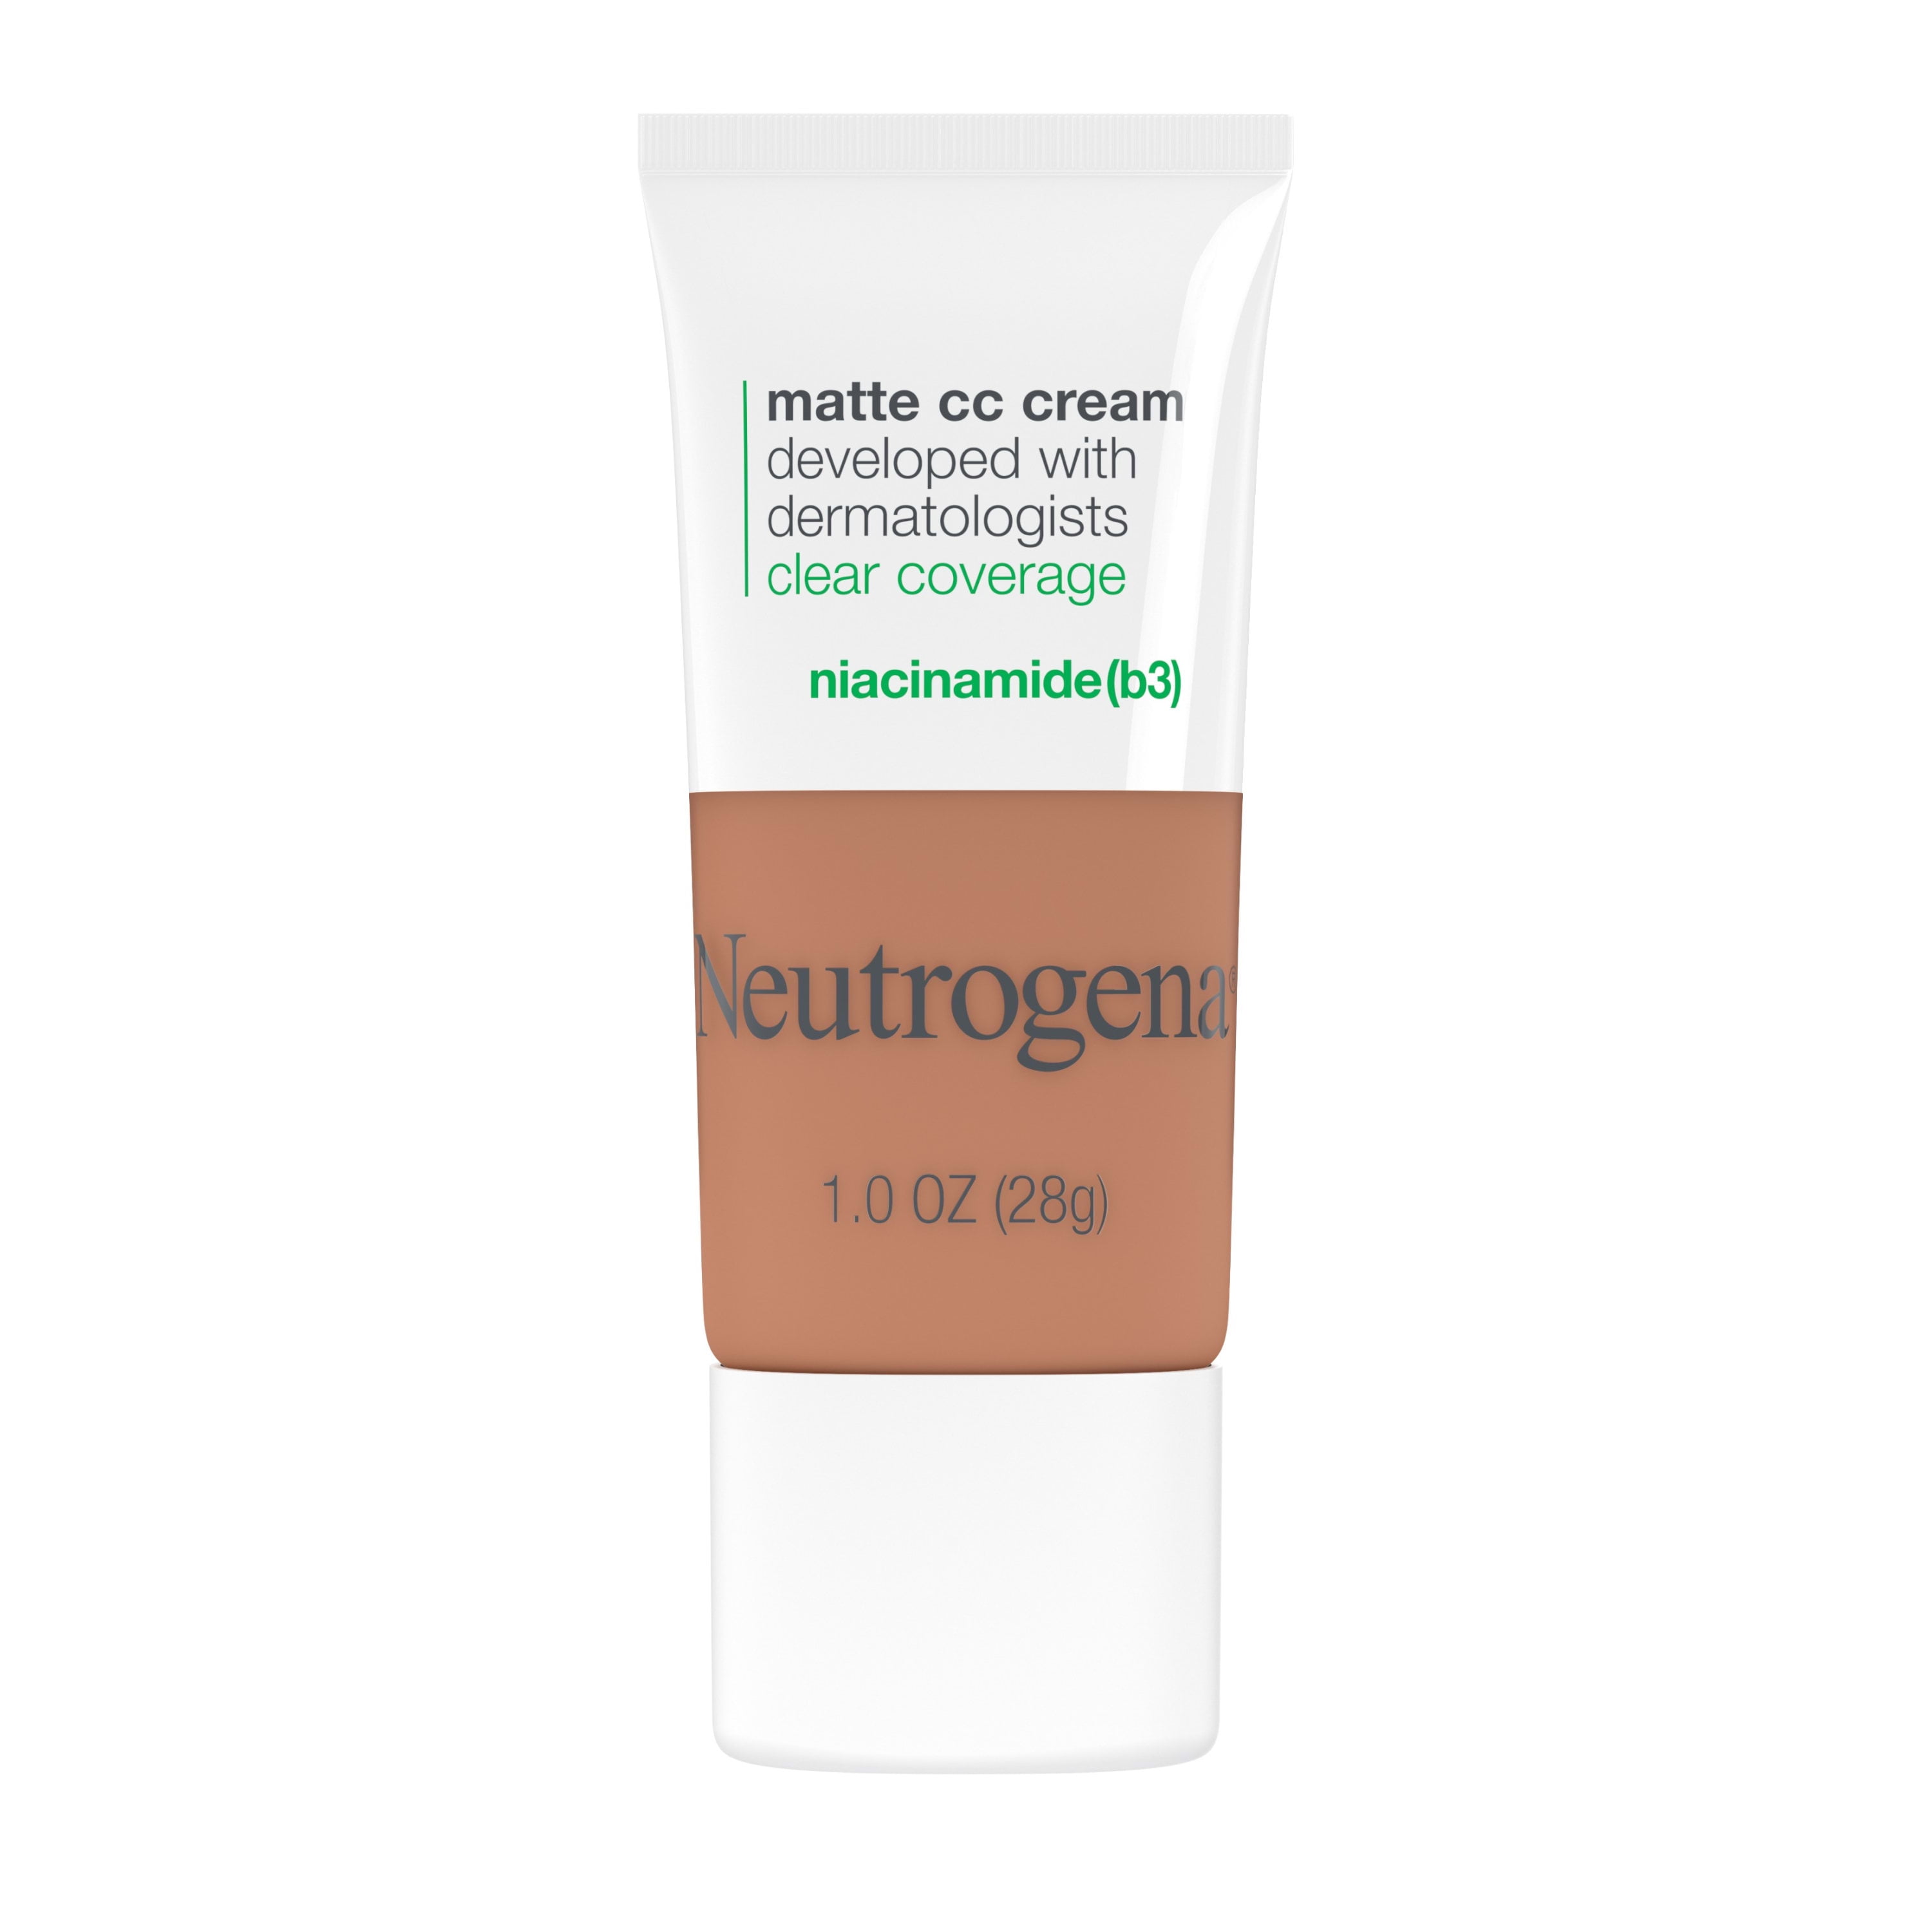 Neutrogena Clear Coverage Flawless Matte CC Cream, Maple, 1 oz